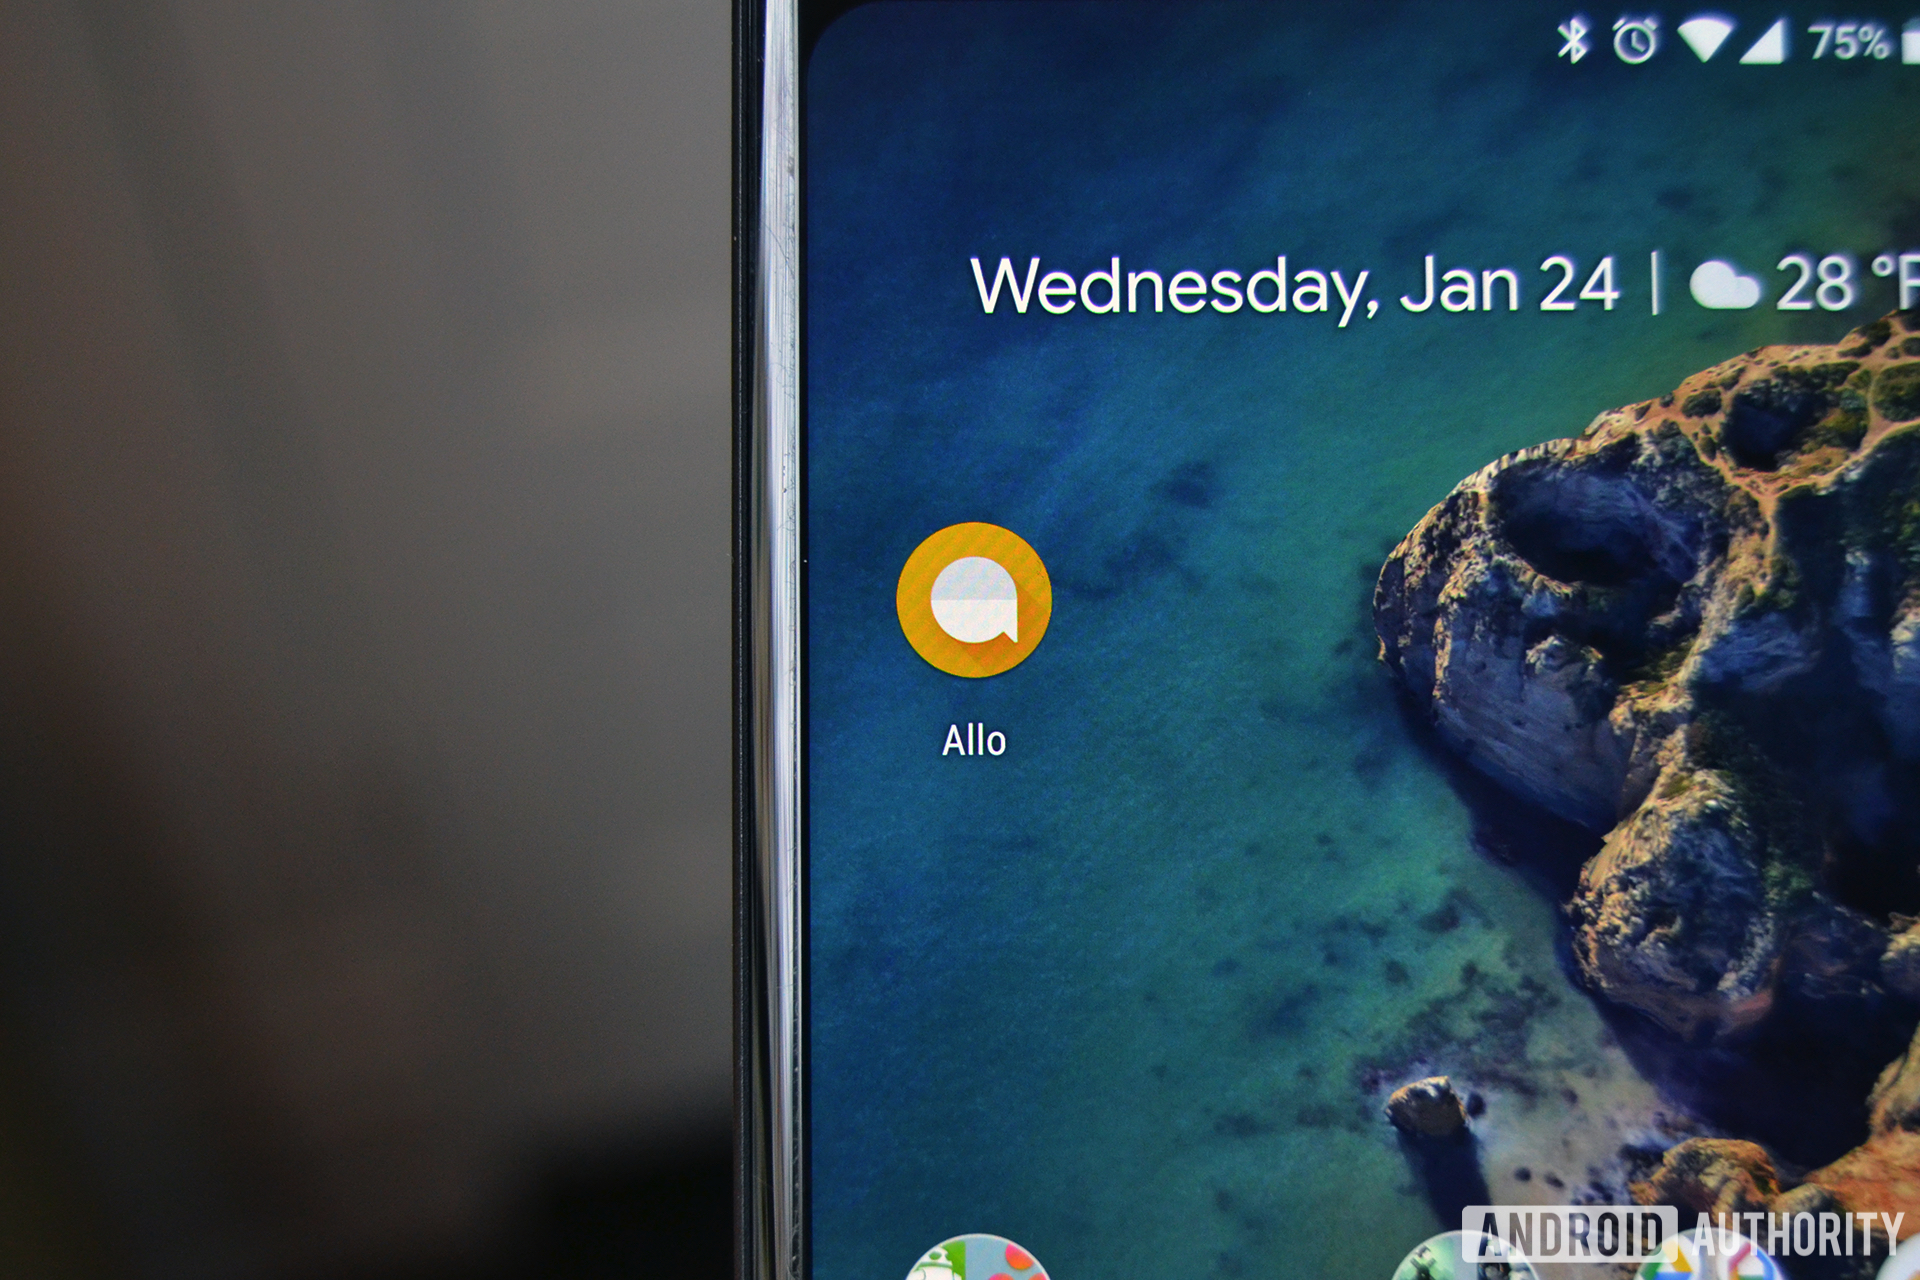 Google Allo app on Google Pixel 2 phone - Google failed products